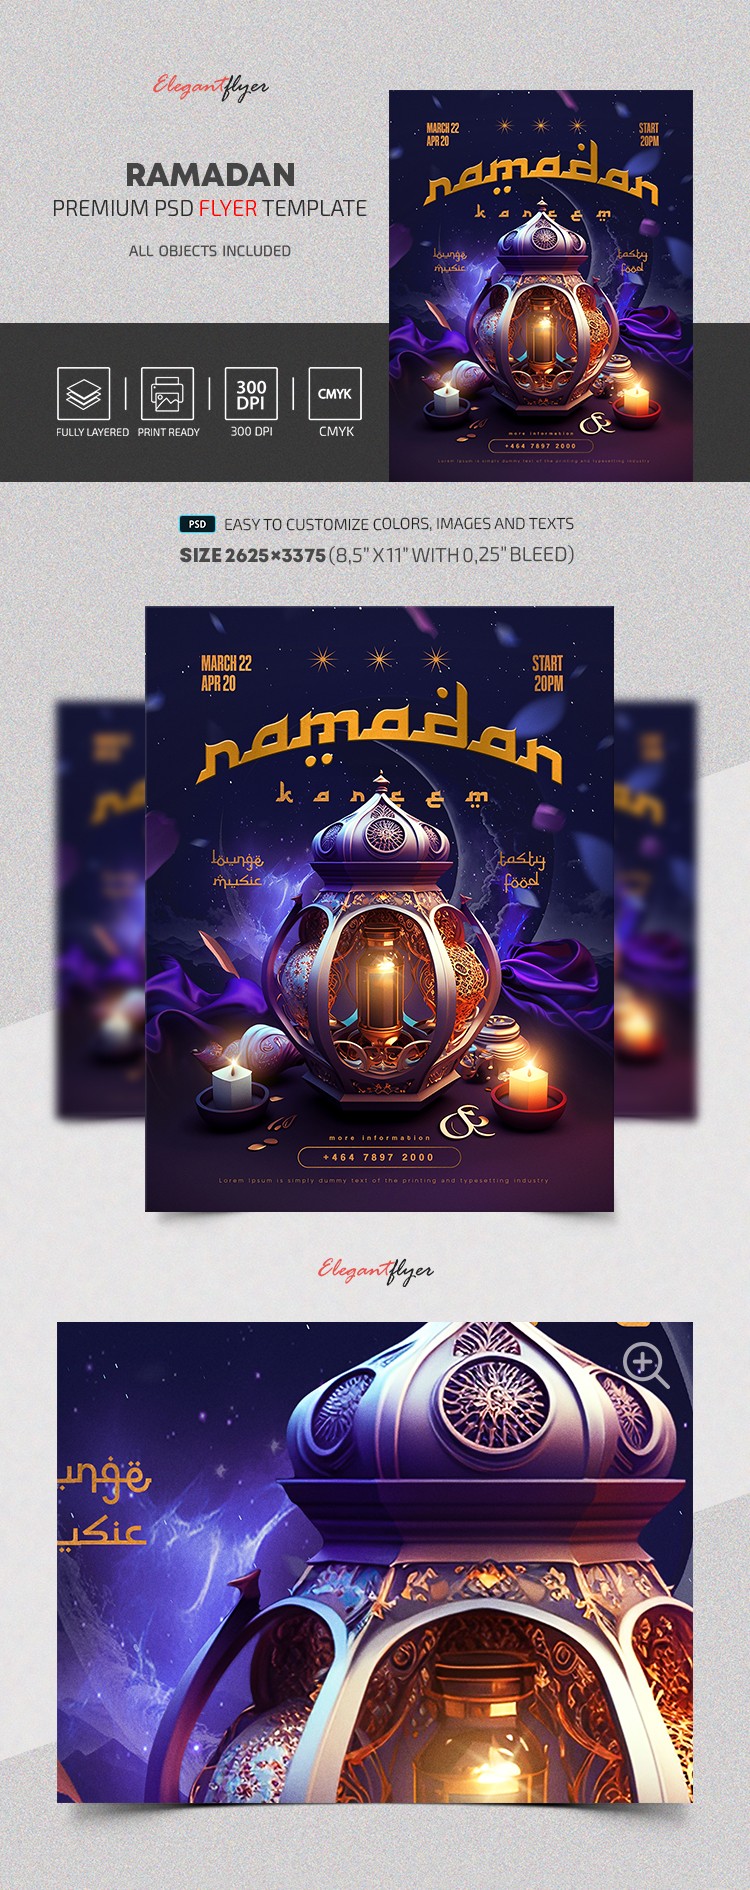 Ramadan Flyer by ElegantFlyer